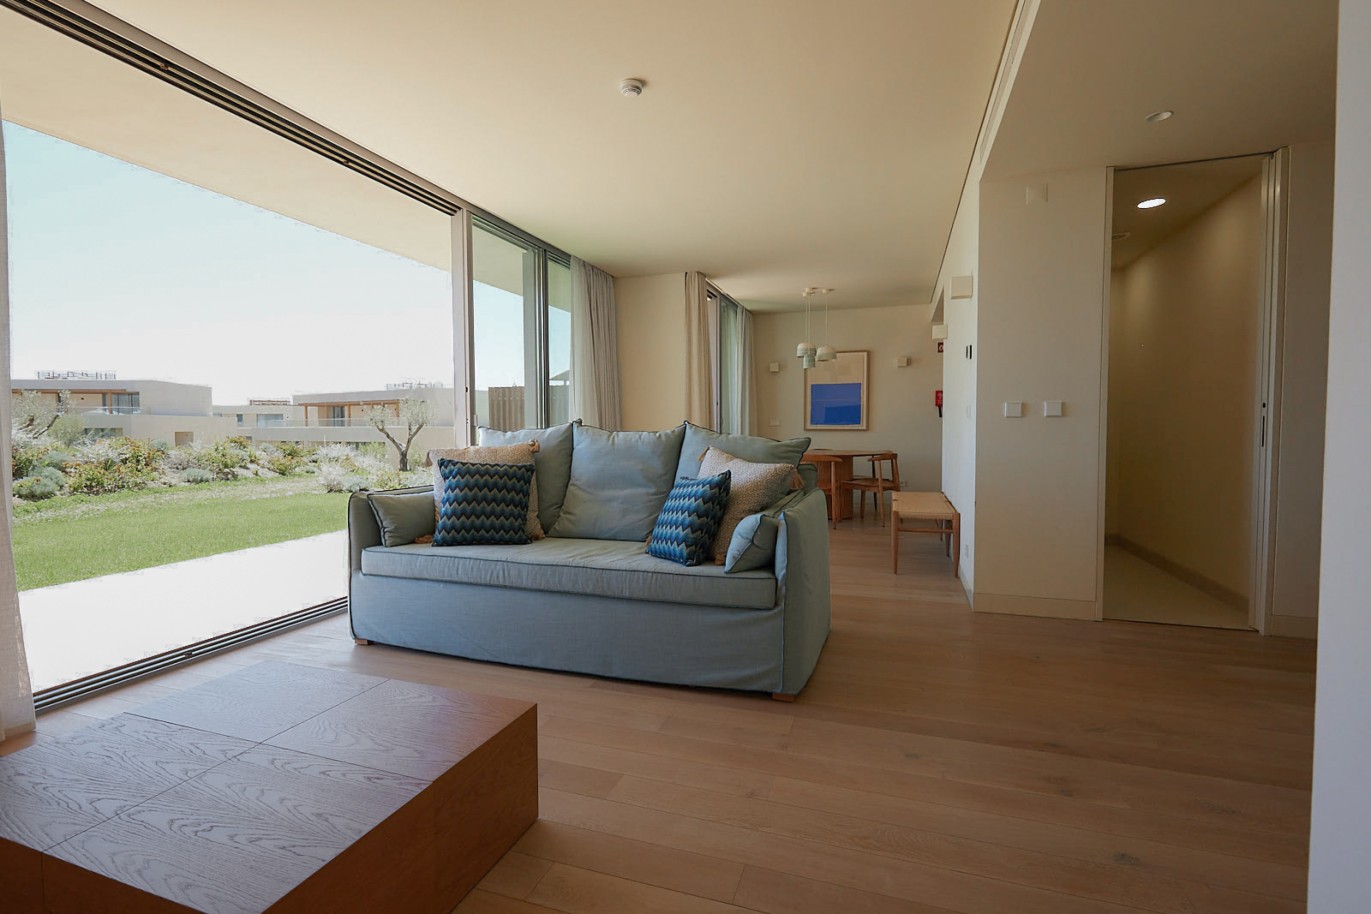 2 bedroom apartment in resort, for sale in Porches, Algarve_229110